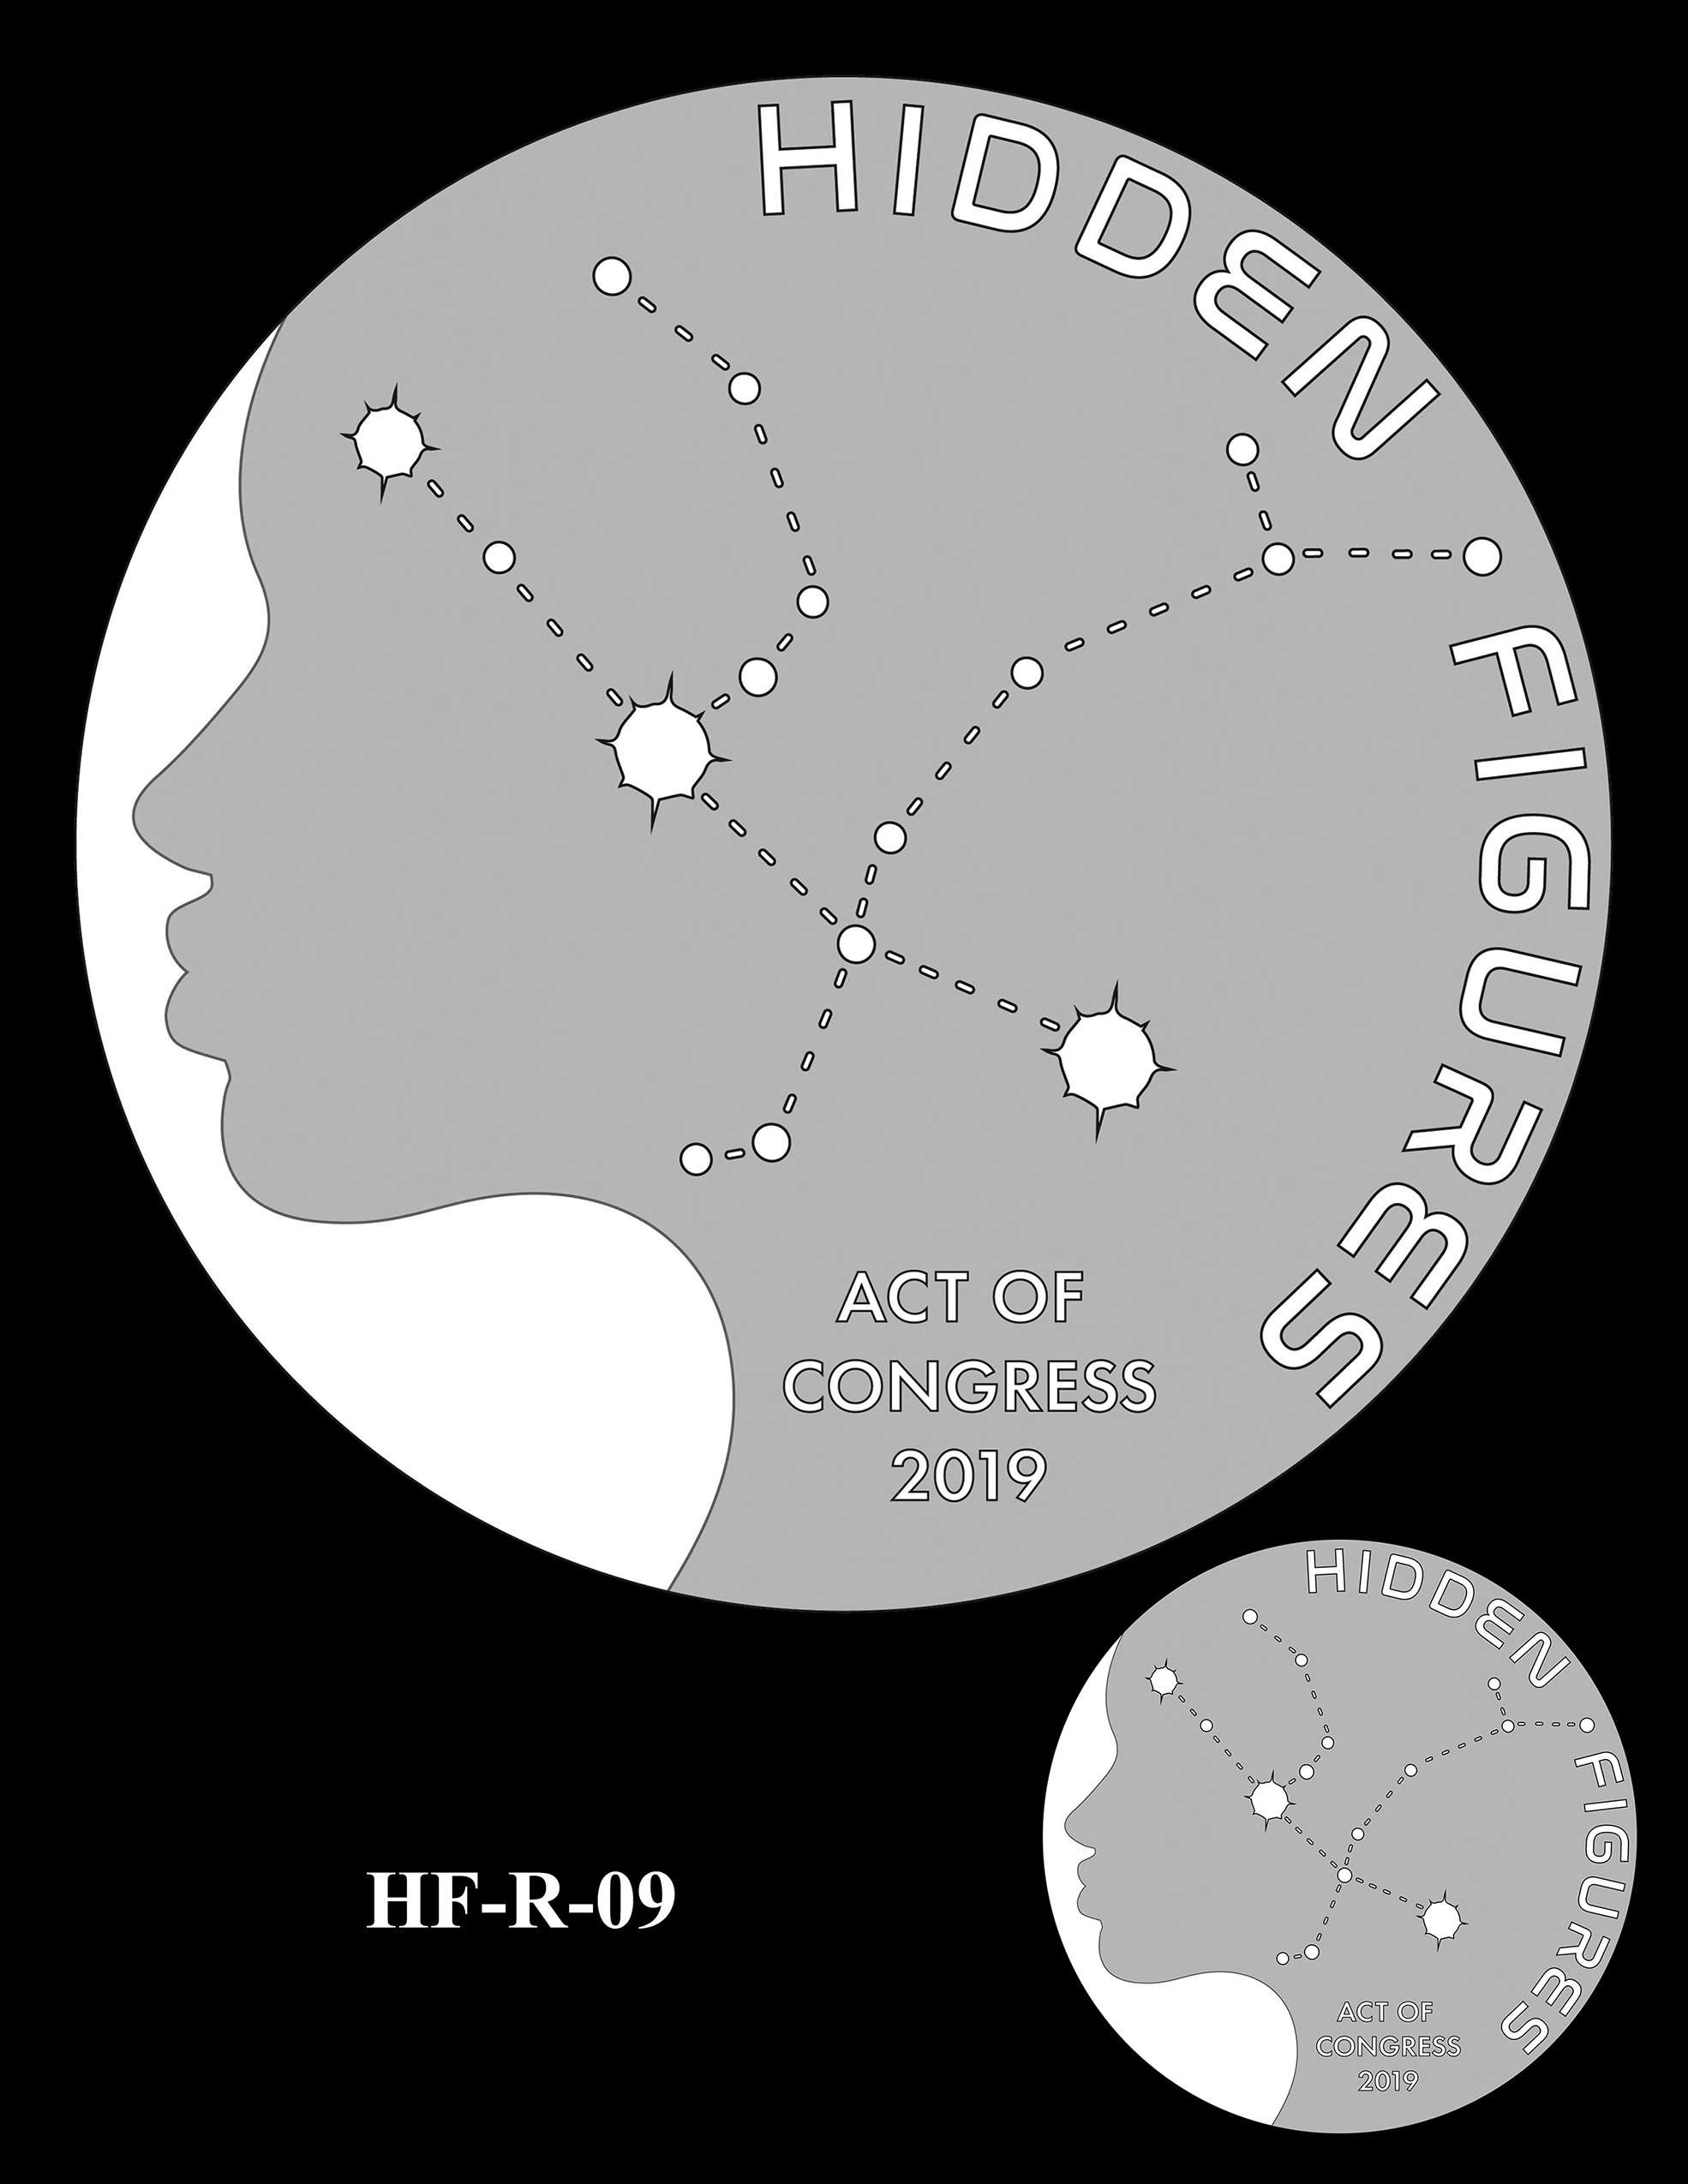 HF-R-09 -- Hidden Figures Group Congressional Gold Medal